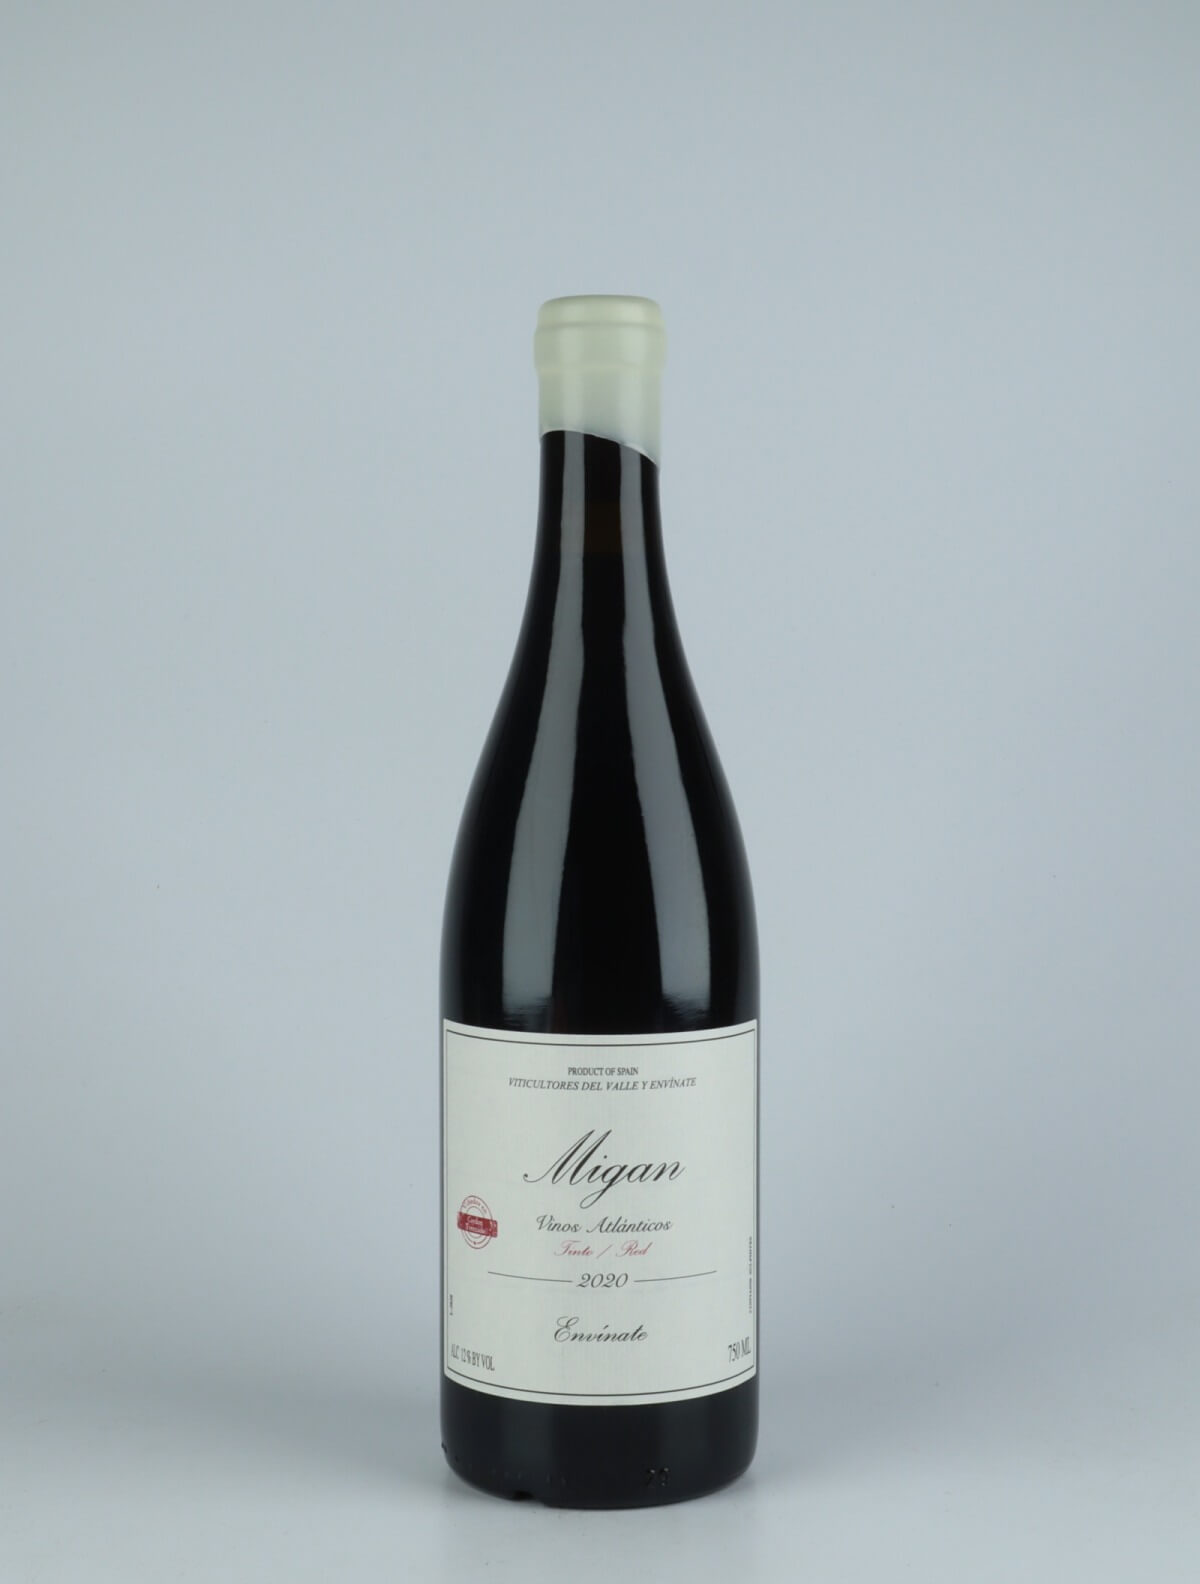 A bottle 2020 Migan - Tenerife Red wine from Envínate,  in Spain